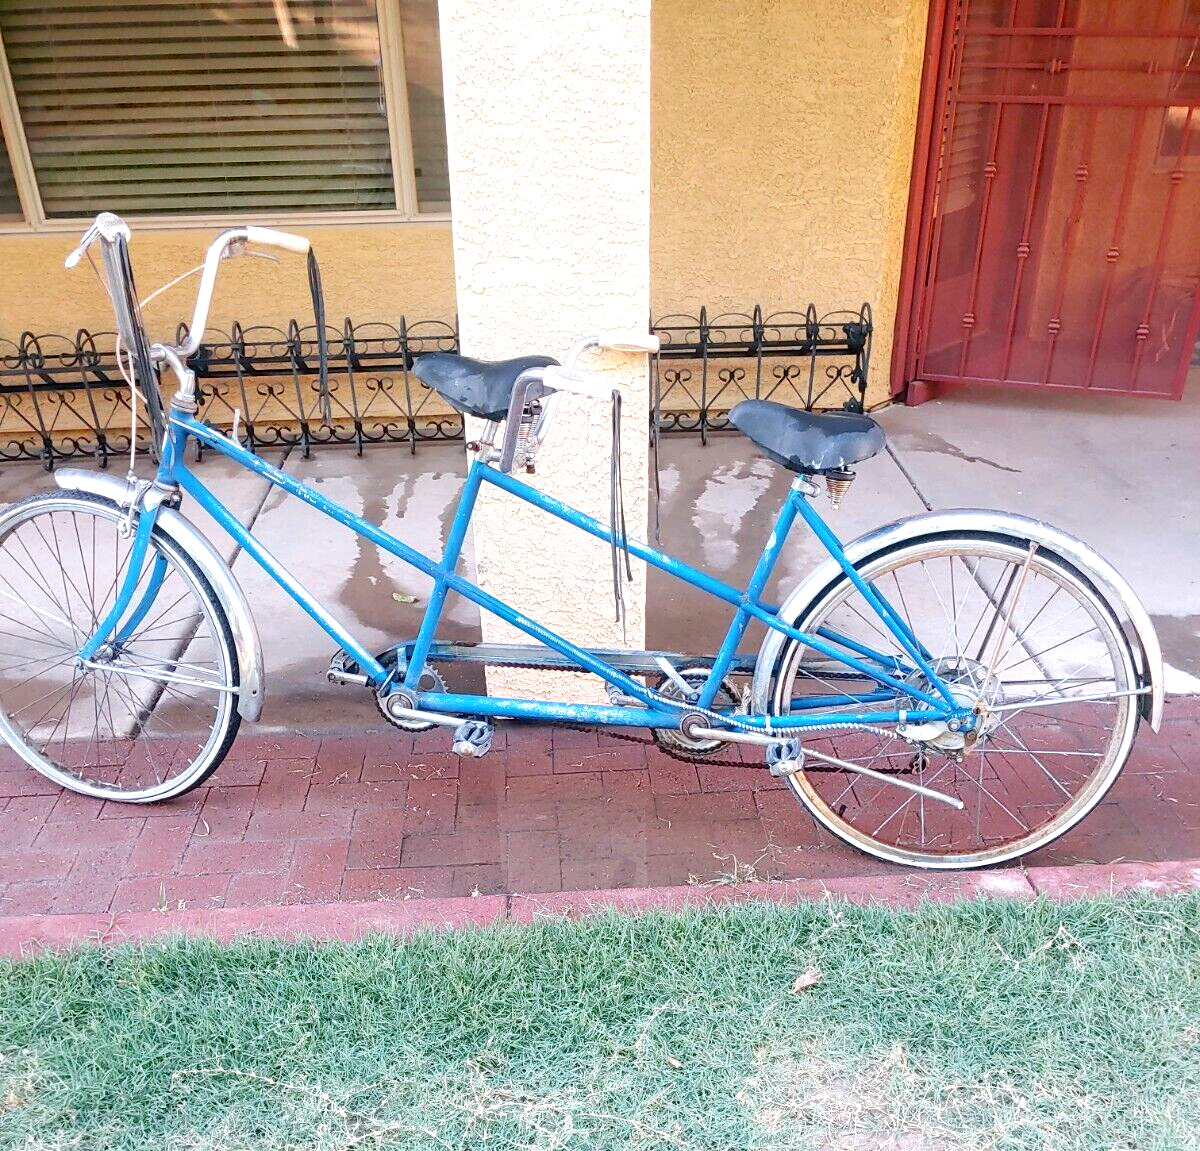 Rare Vintage 1961 SCHWINN Tandem Bicycle Lovely Azure Blue Complete 26 In Wheels